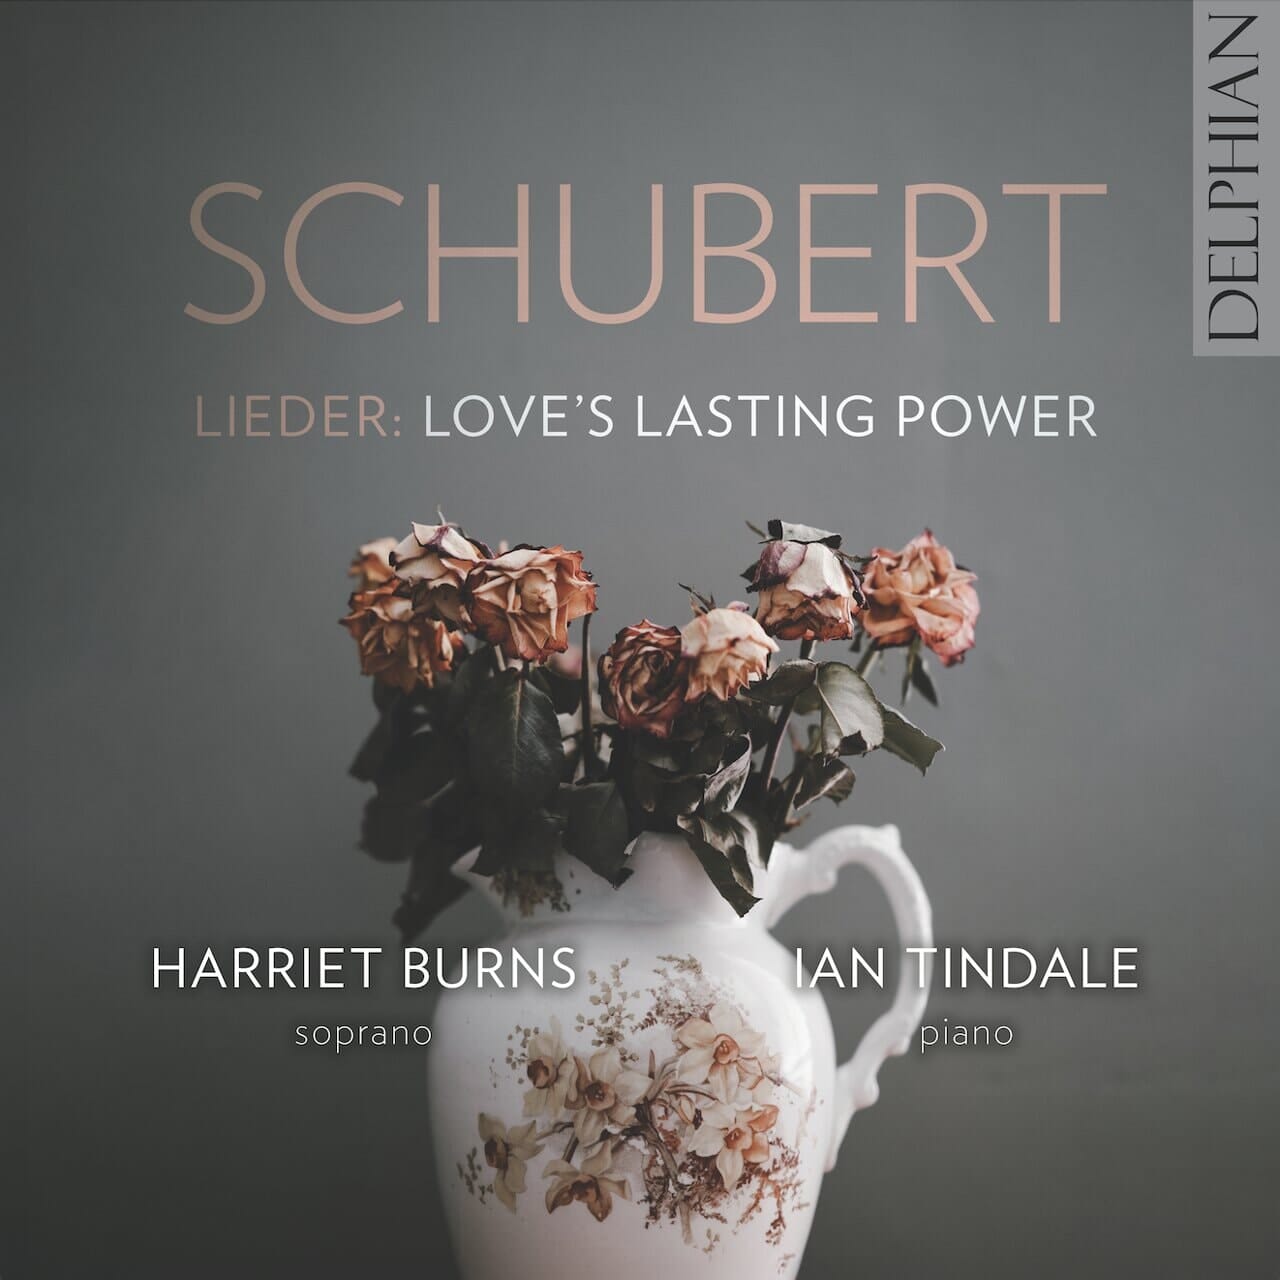 Schubert Lieder: Love’s Lasting Power CD Delphian Records